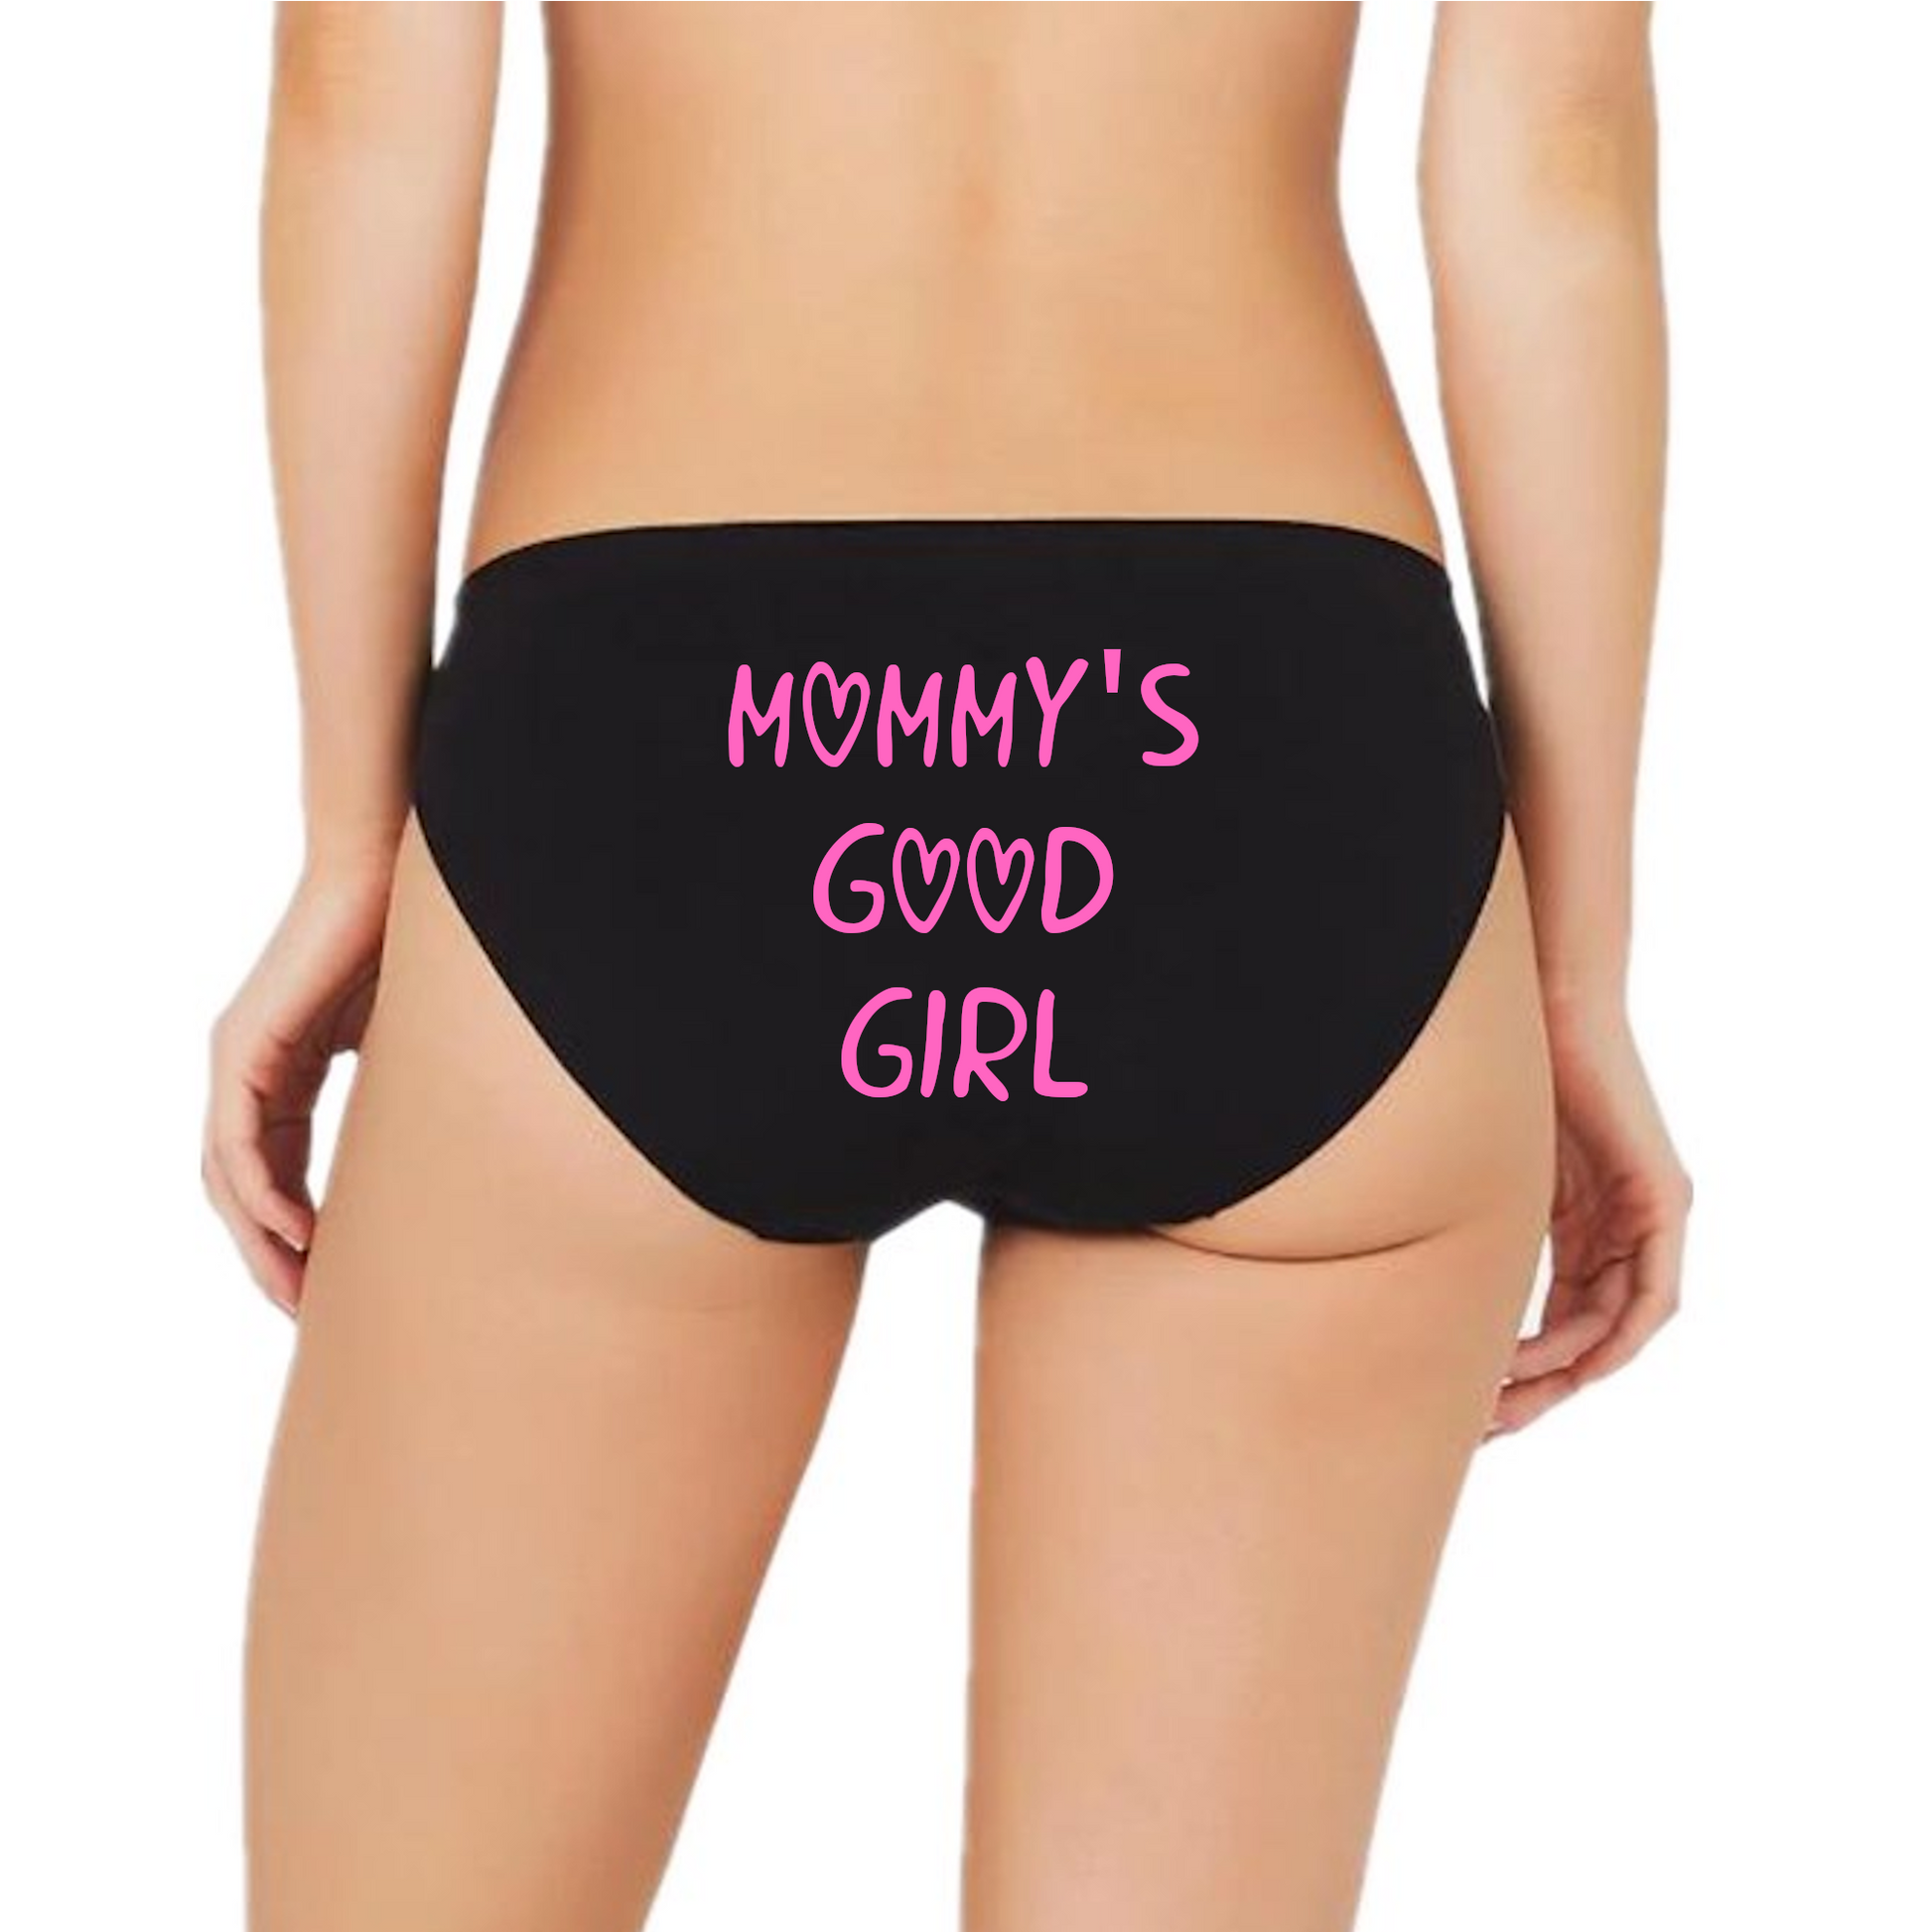 Mommys Good Girl mdlg Panties